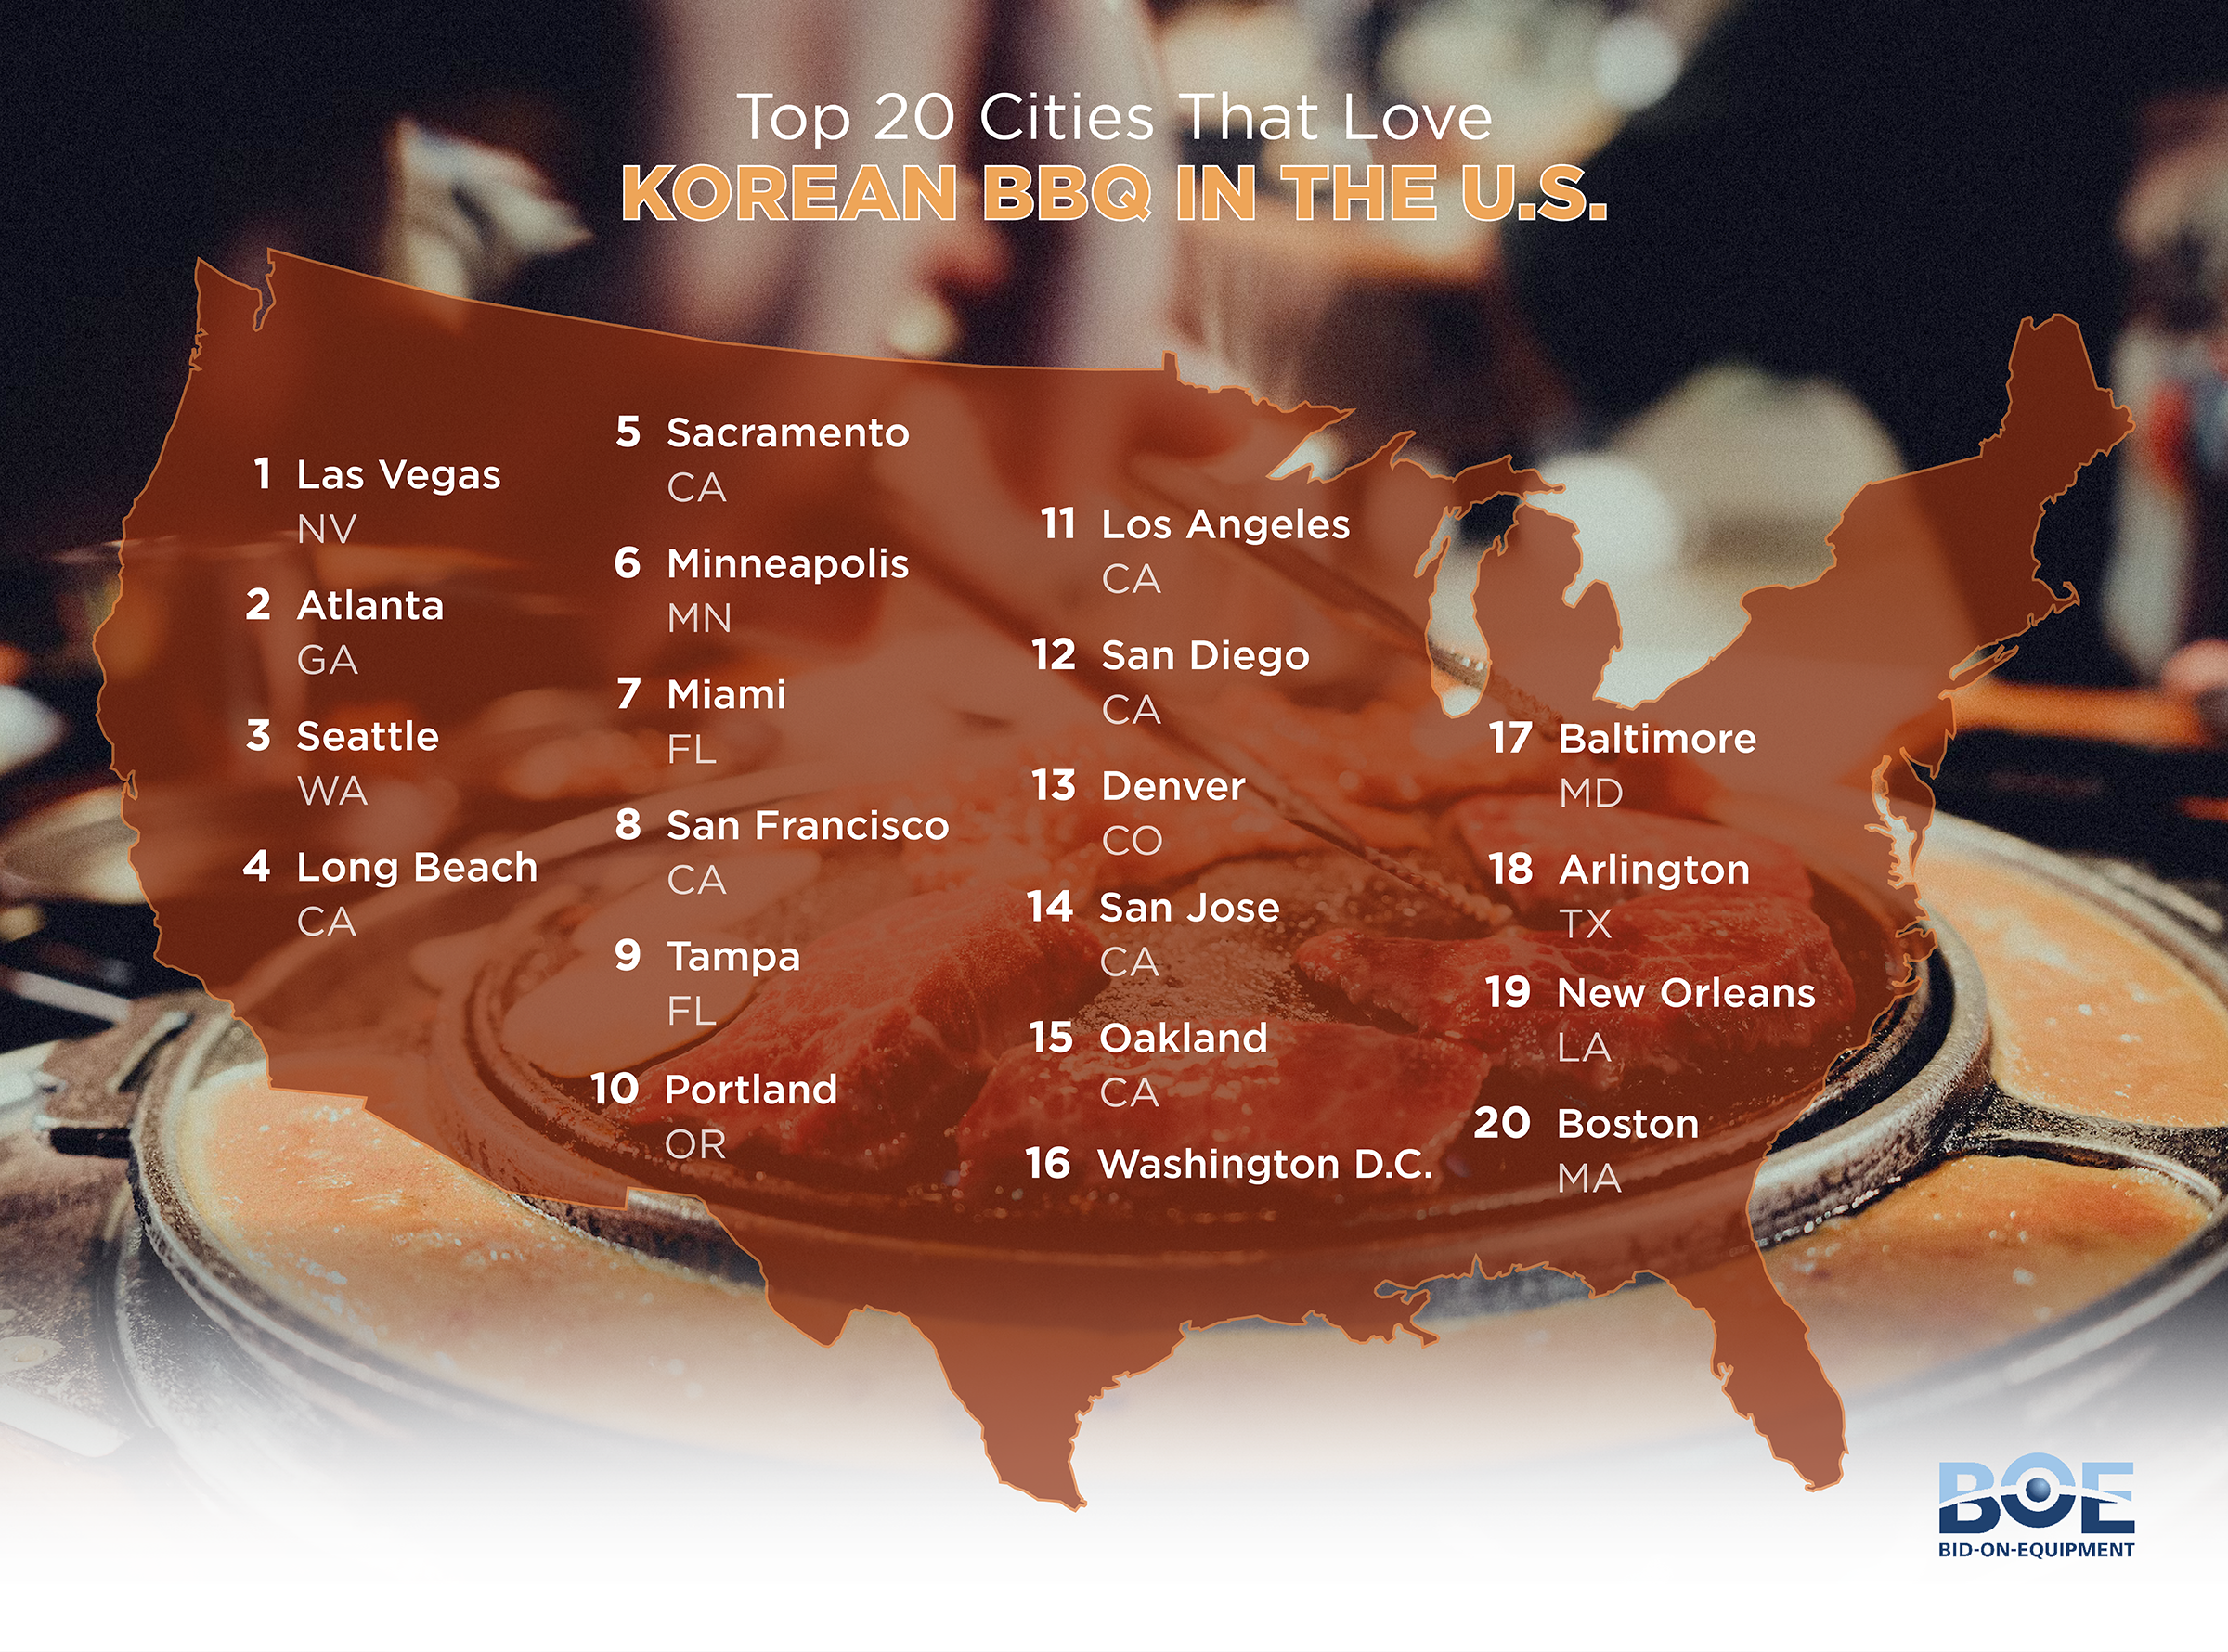 Top 20 cities for Korean BBQ in the US Map - report from bideonequipment.com